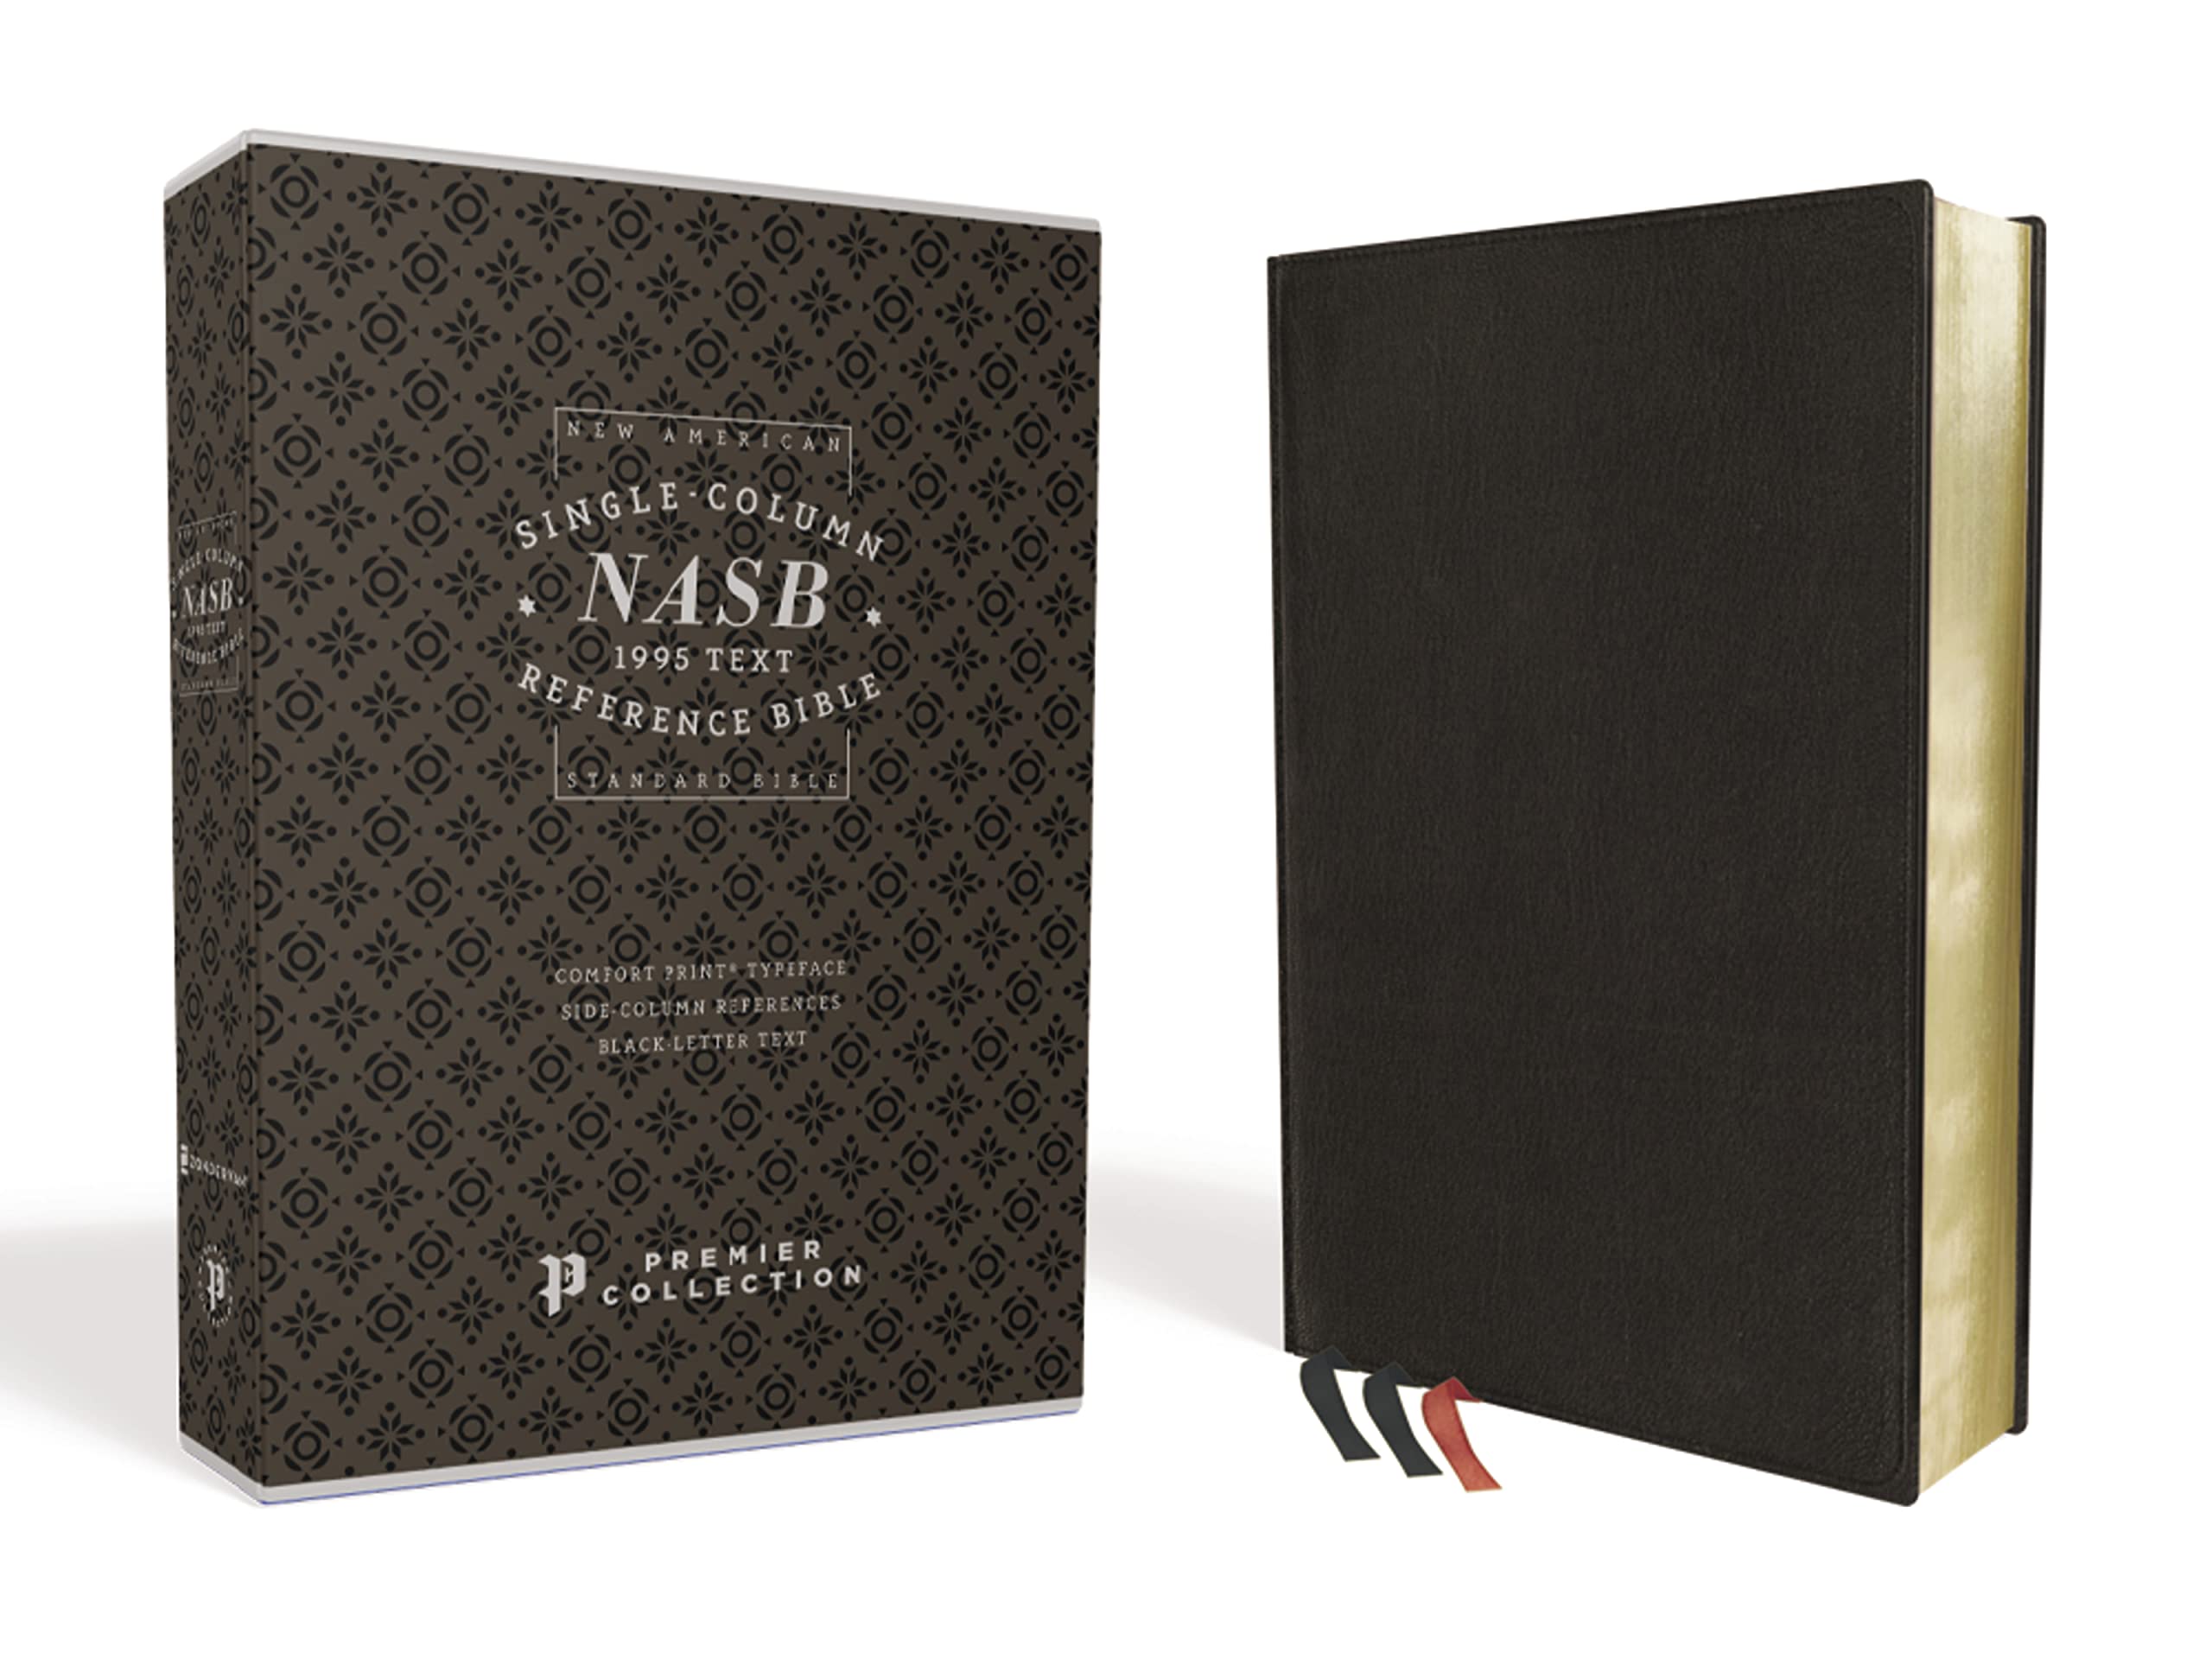 NASB, Single-Column Reference Bible, Wide Margin, Premium Goatskin Leather, Black, Premier Collection, Black Letter, 1995 Text, Art Gilded Edges, C...